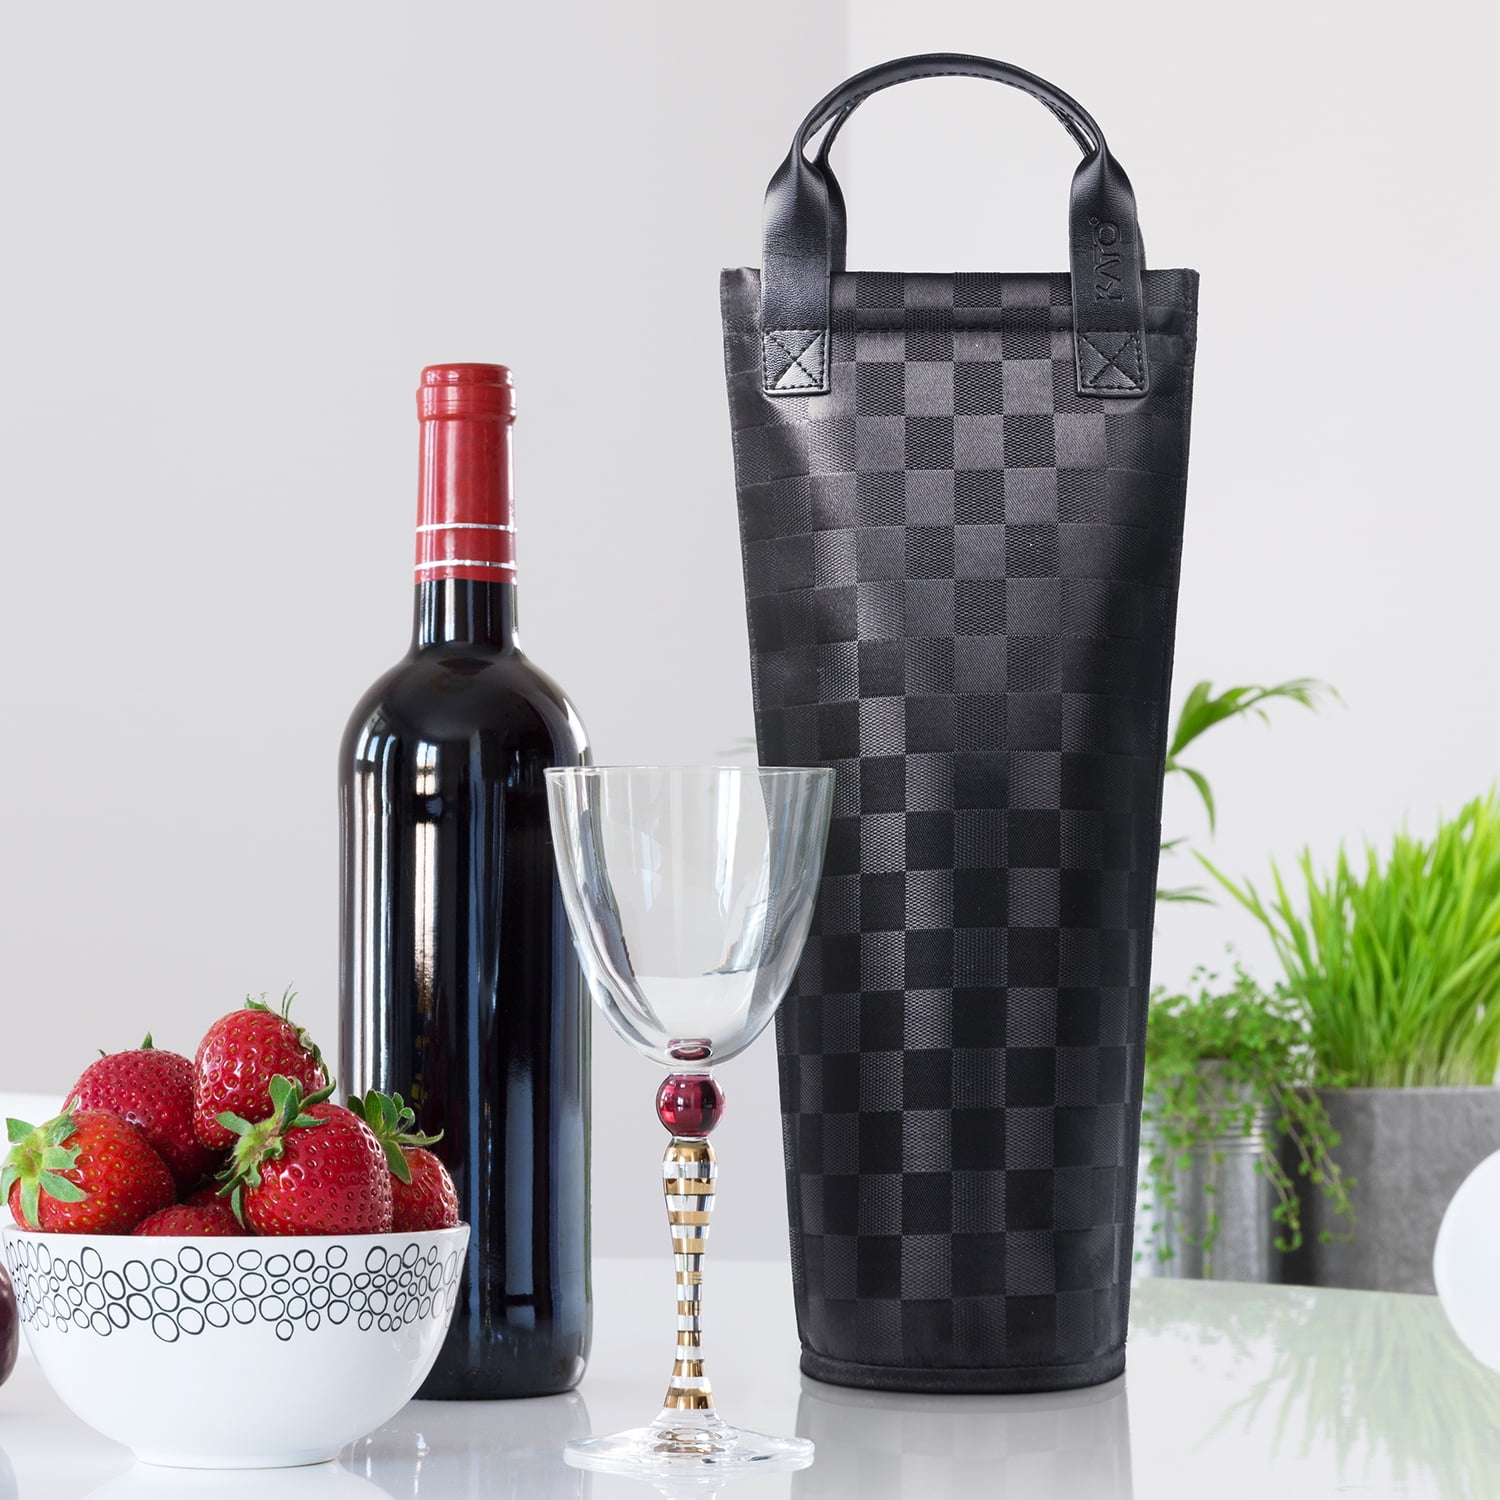 Vinarmour Wine Travel Bag: Protective Wine Bottle Carrier